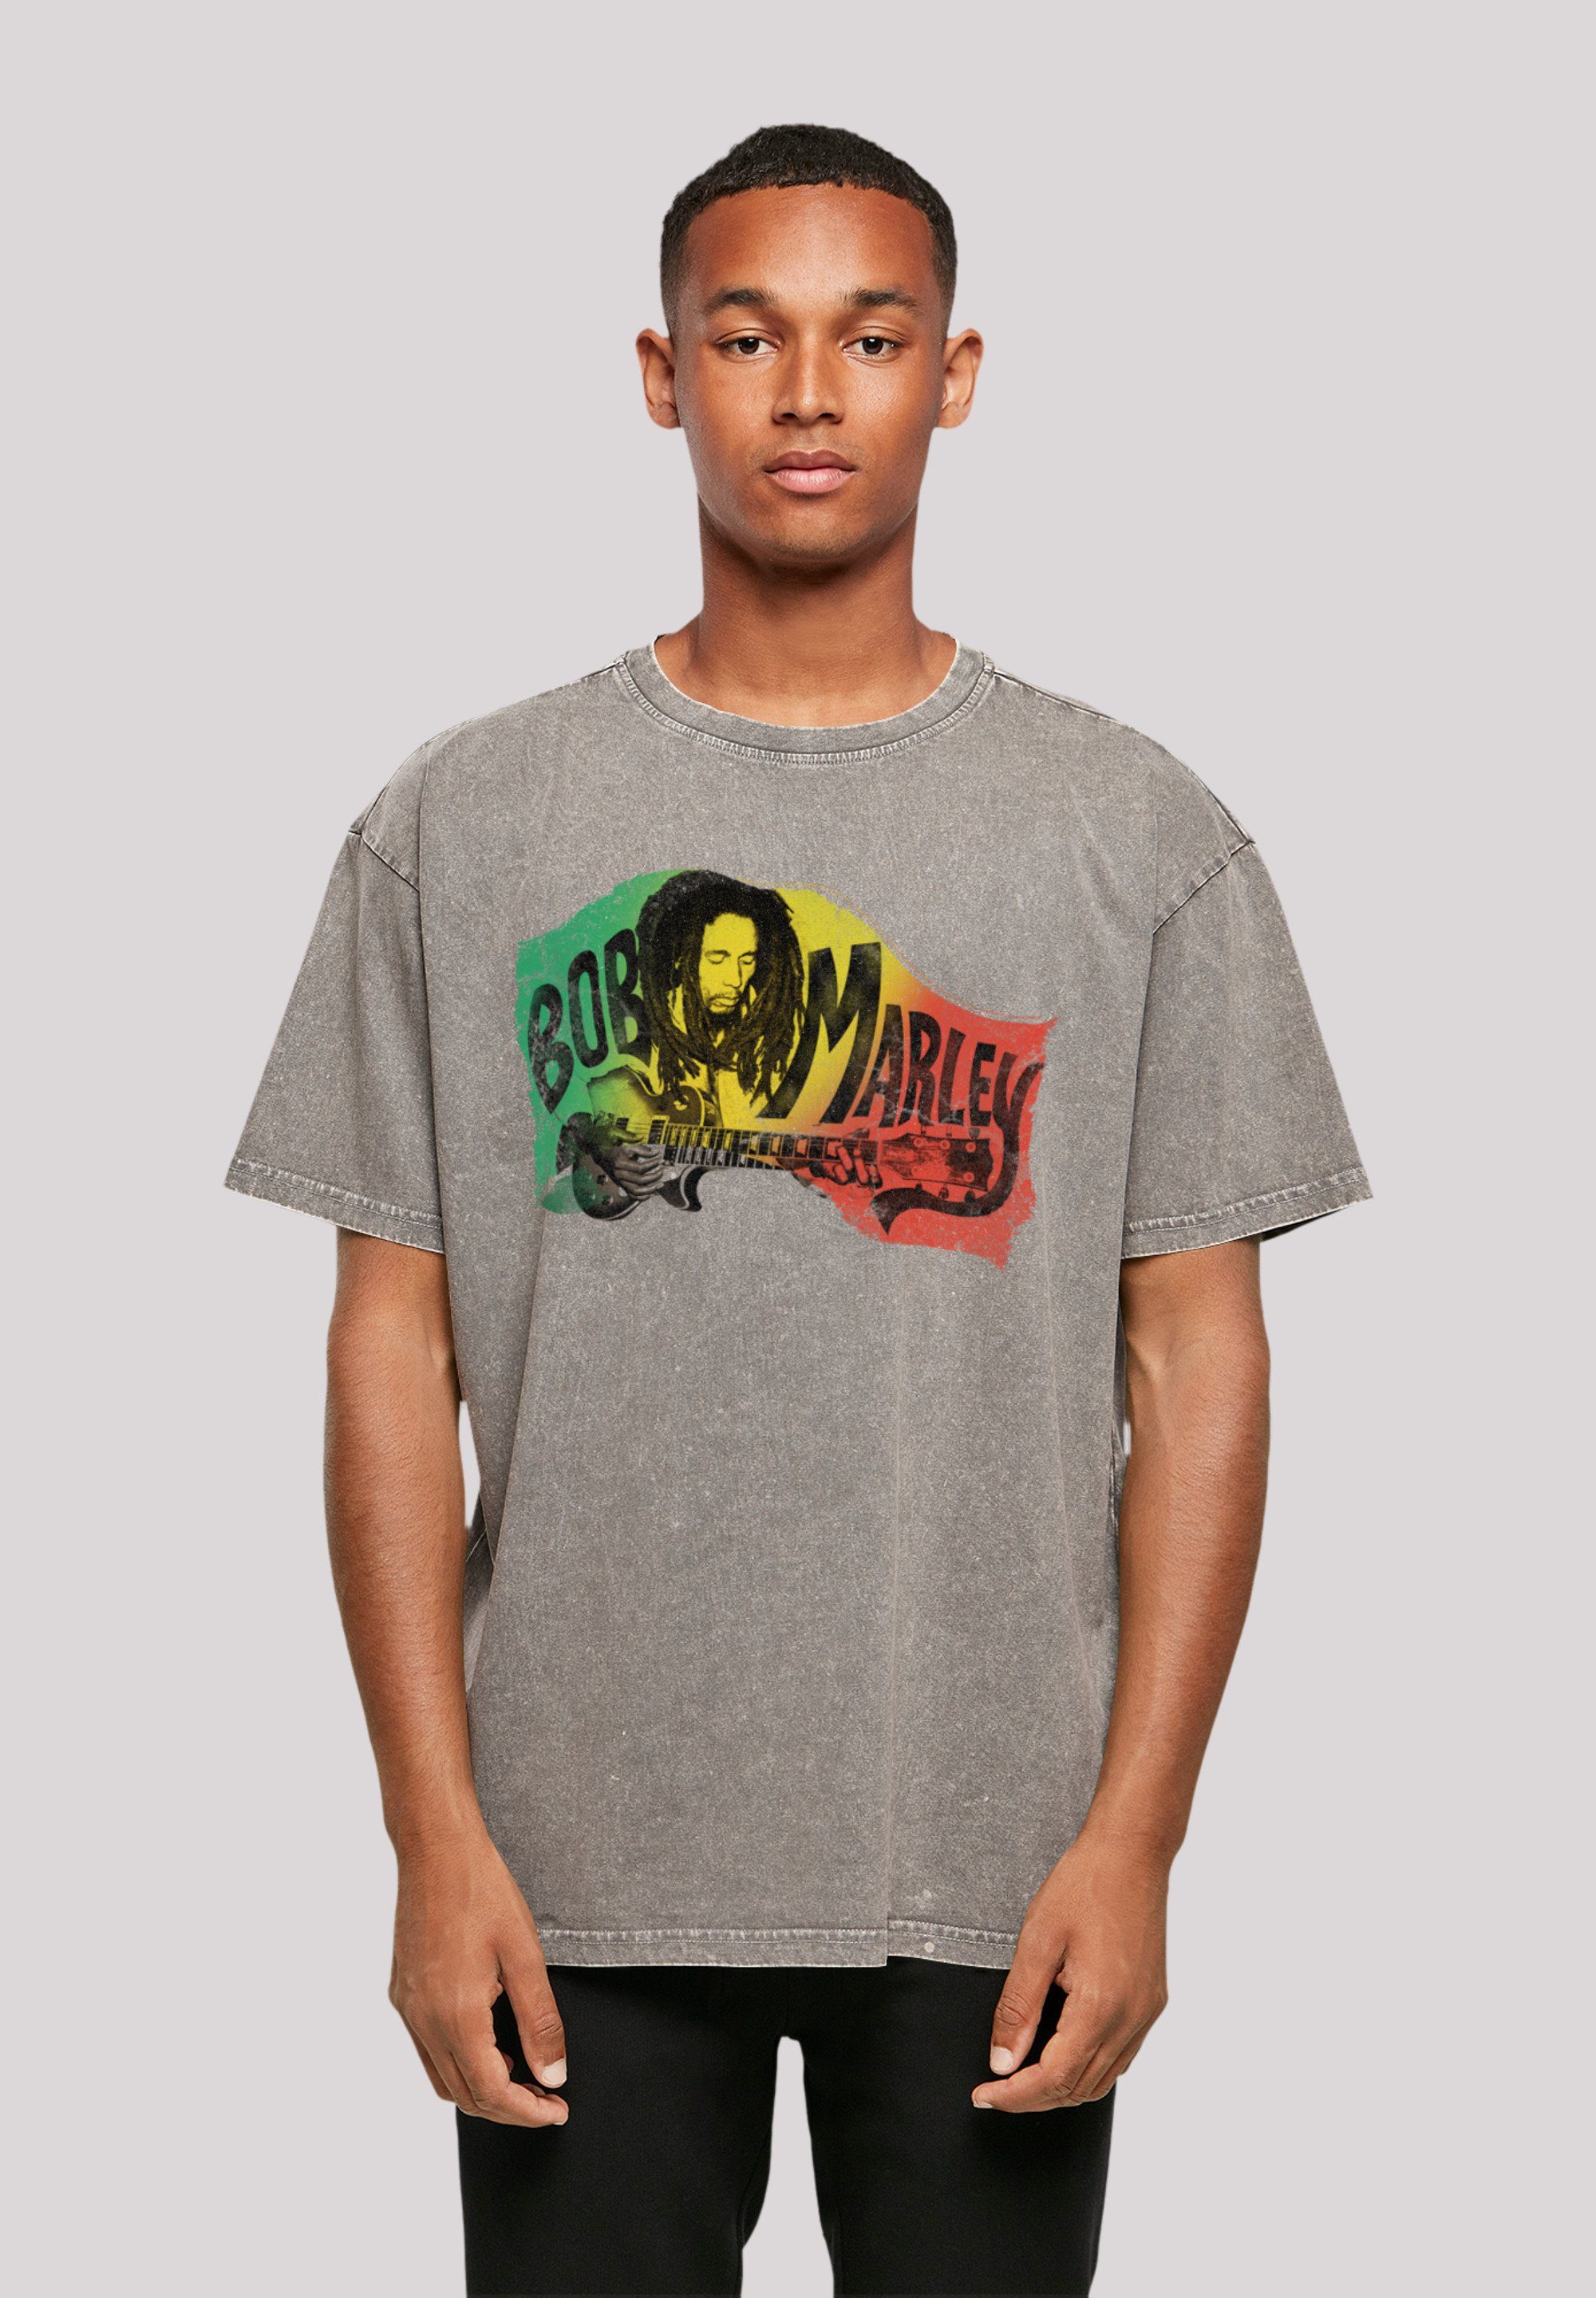 By Musik, Music Premium Chords Qualität, F4NT4STIC Rock Asphalt T-Shirt Marley Off Reggae Bob